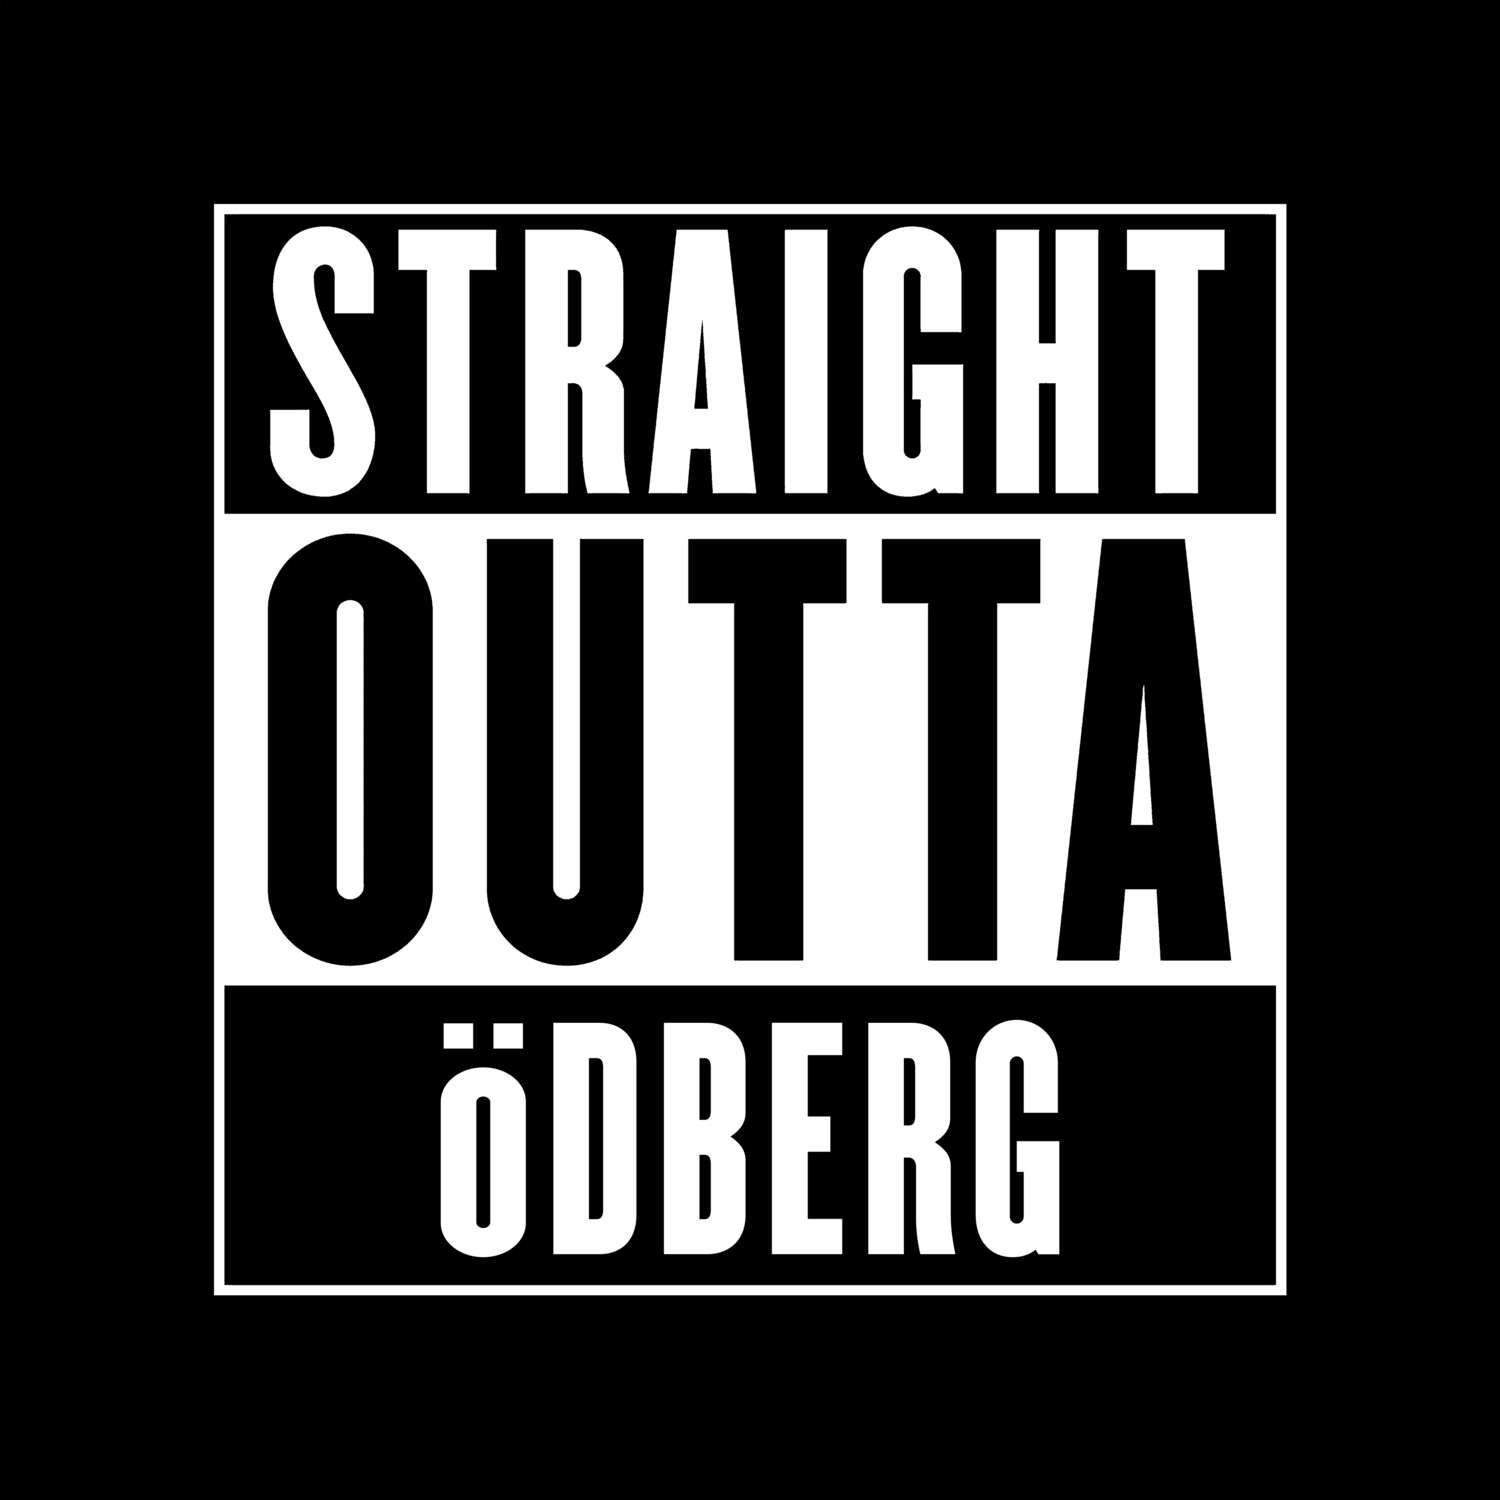 Ödberg T-Shirt »Straight Outta«